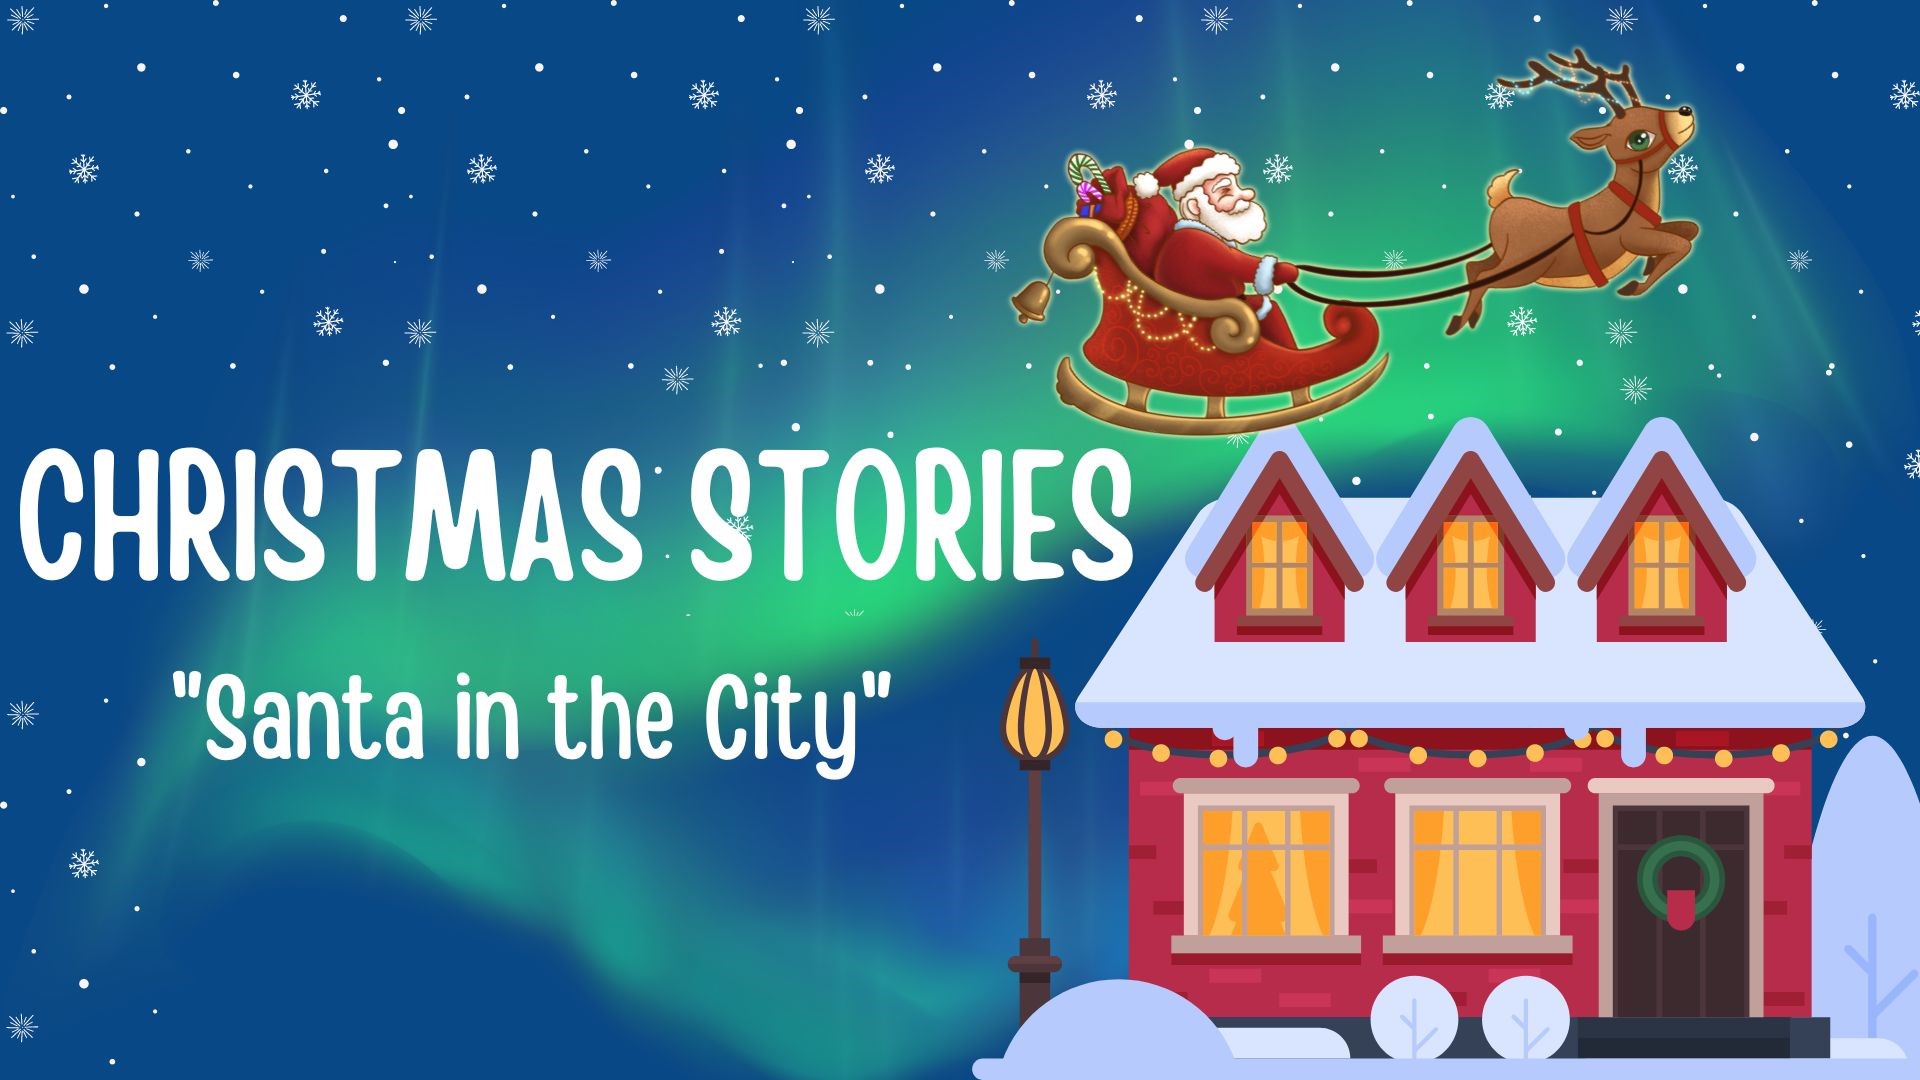 WKYC's Leon Bibb reads "Santa in the City" to celebrate the holiday season.